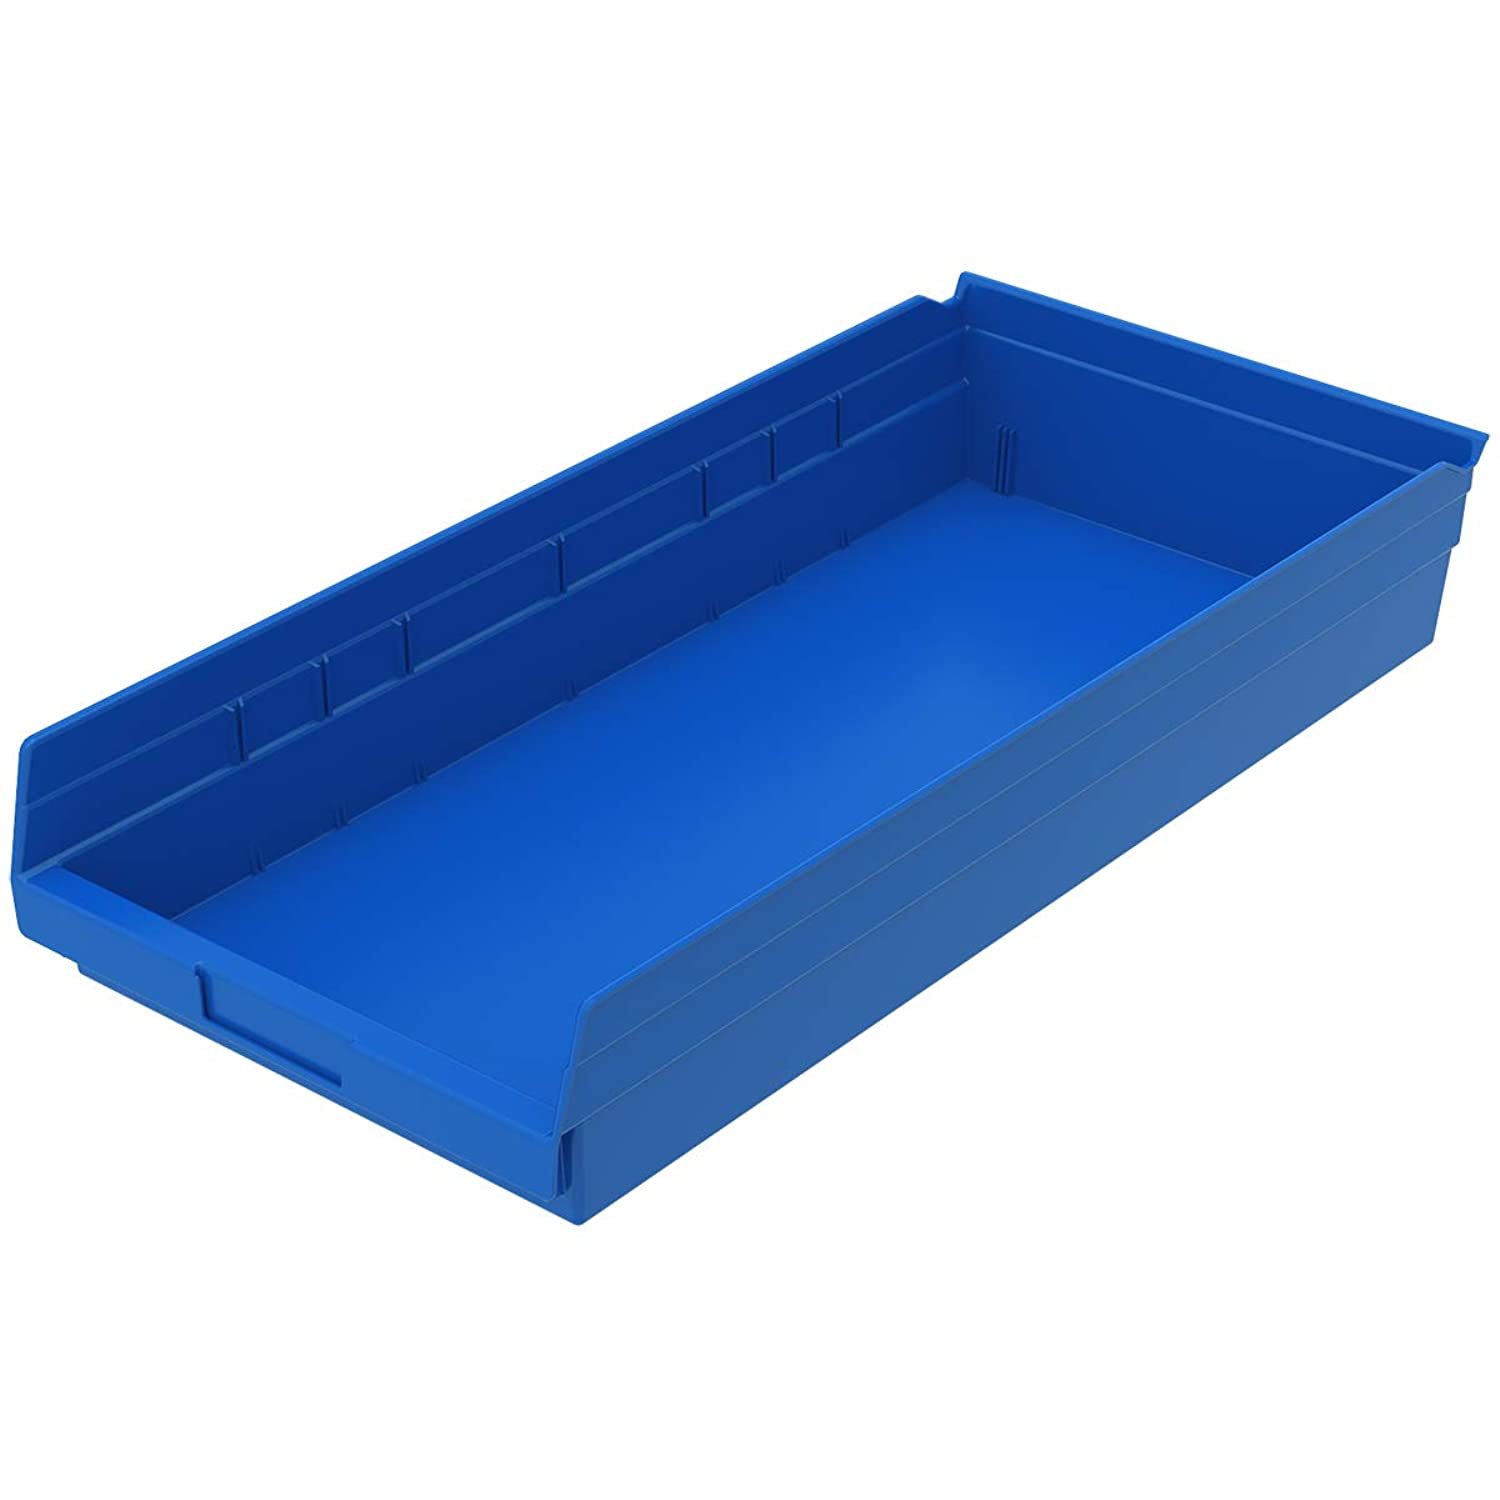 Primary image for Akro-Mils 30174 Plastic Nesting Shelf Bin Box, (24-Inch x 11-Inch x 4-Inch), Blu